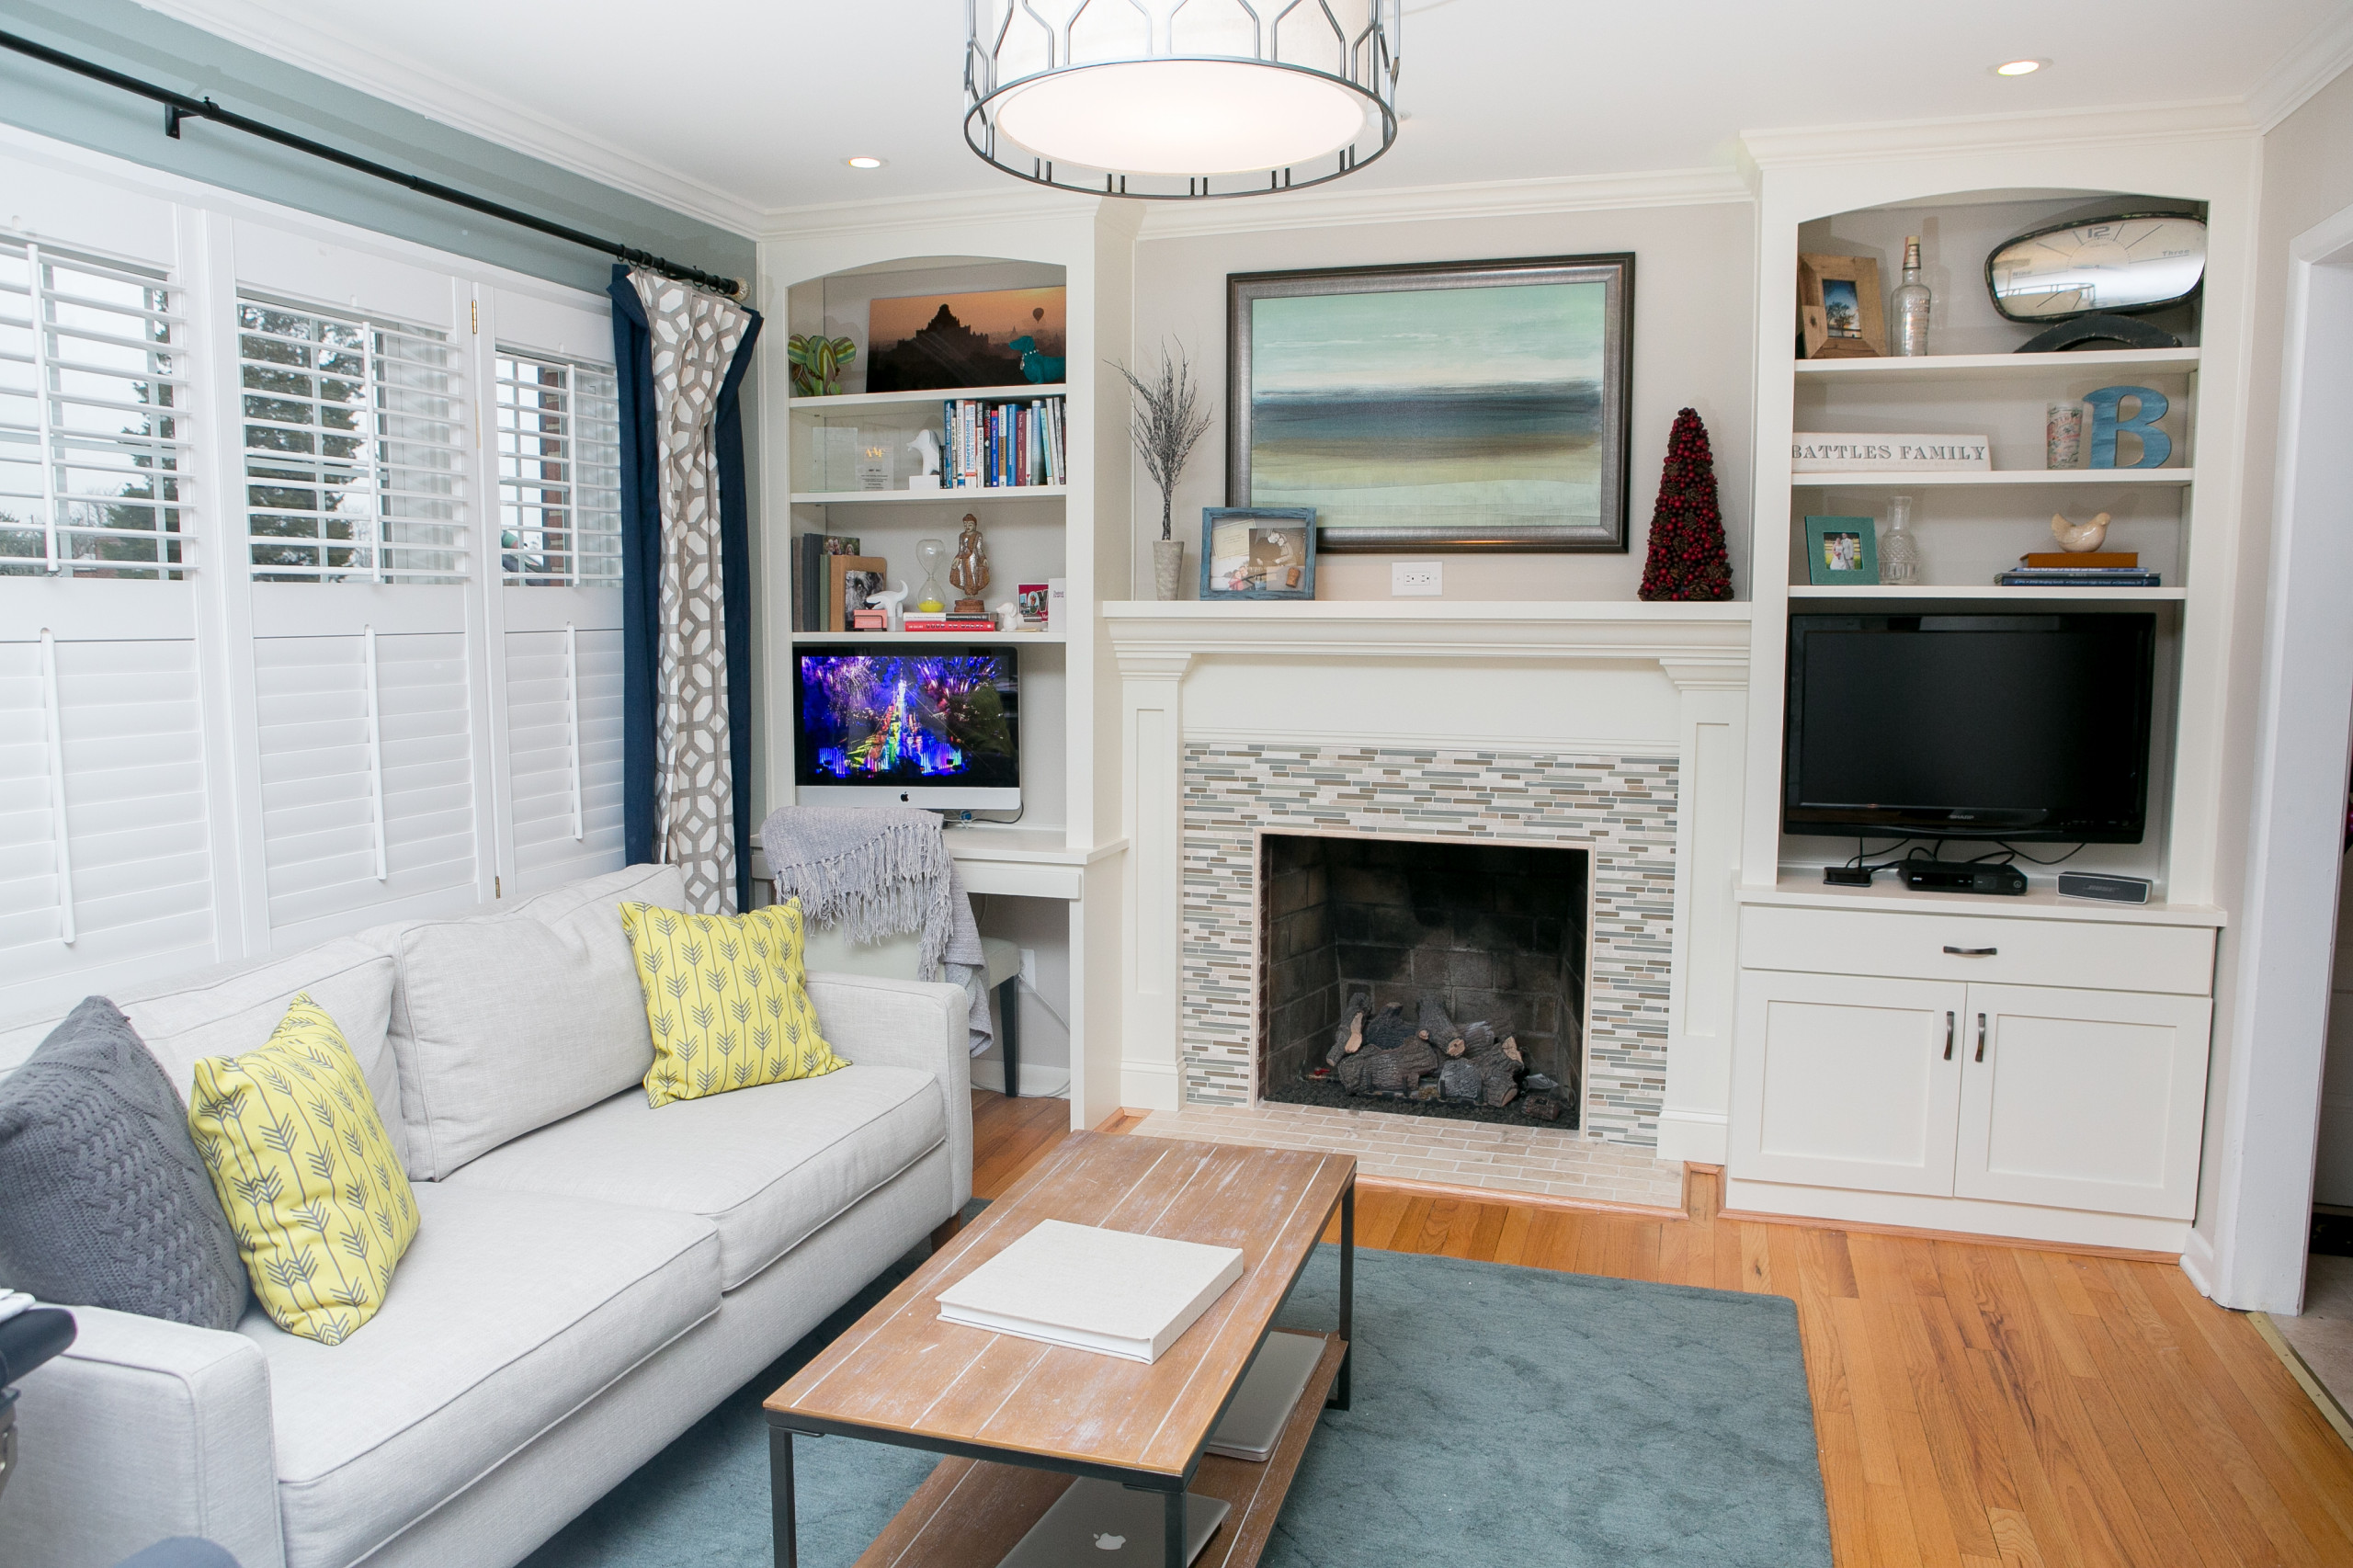 Living Room Office Combination - Photos & Ideas | Houzz